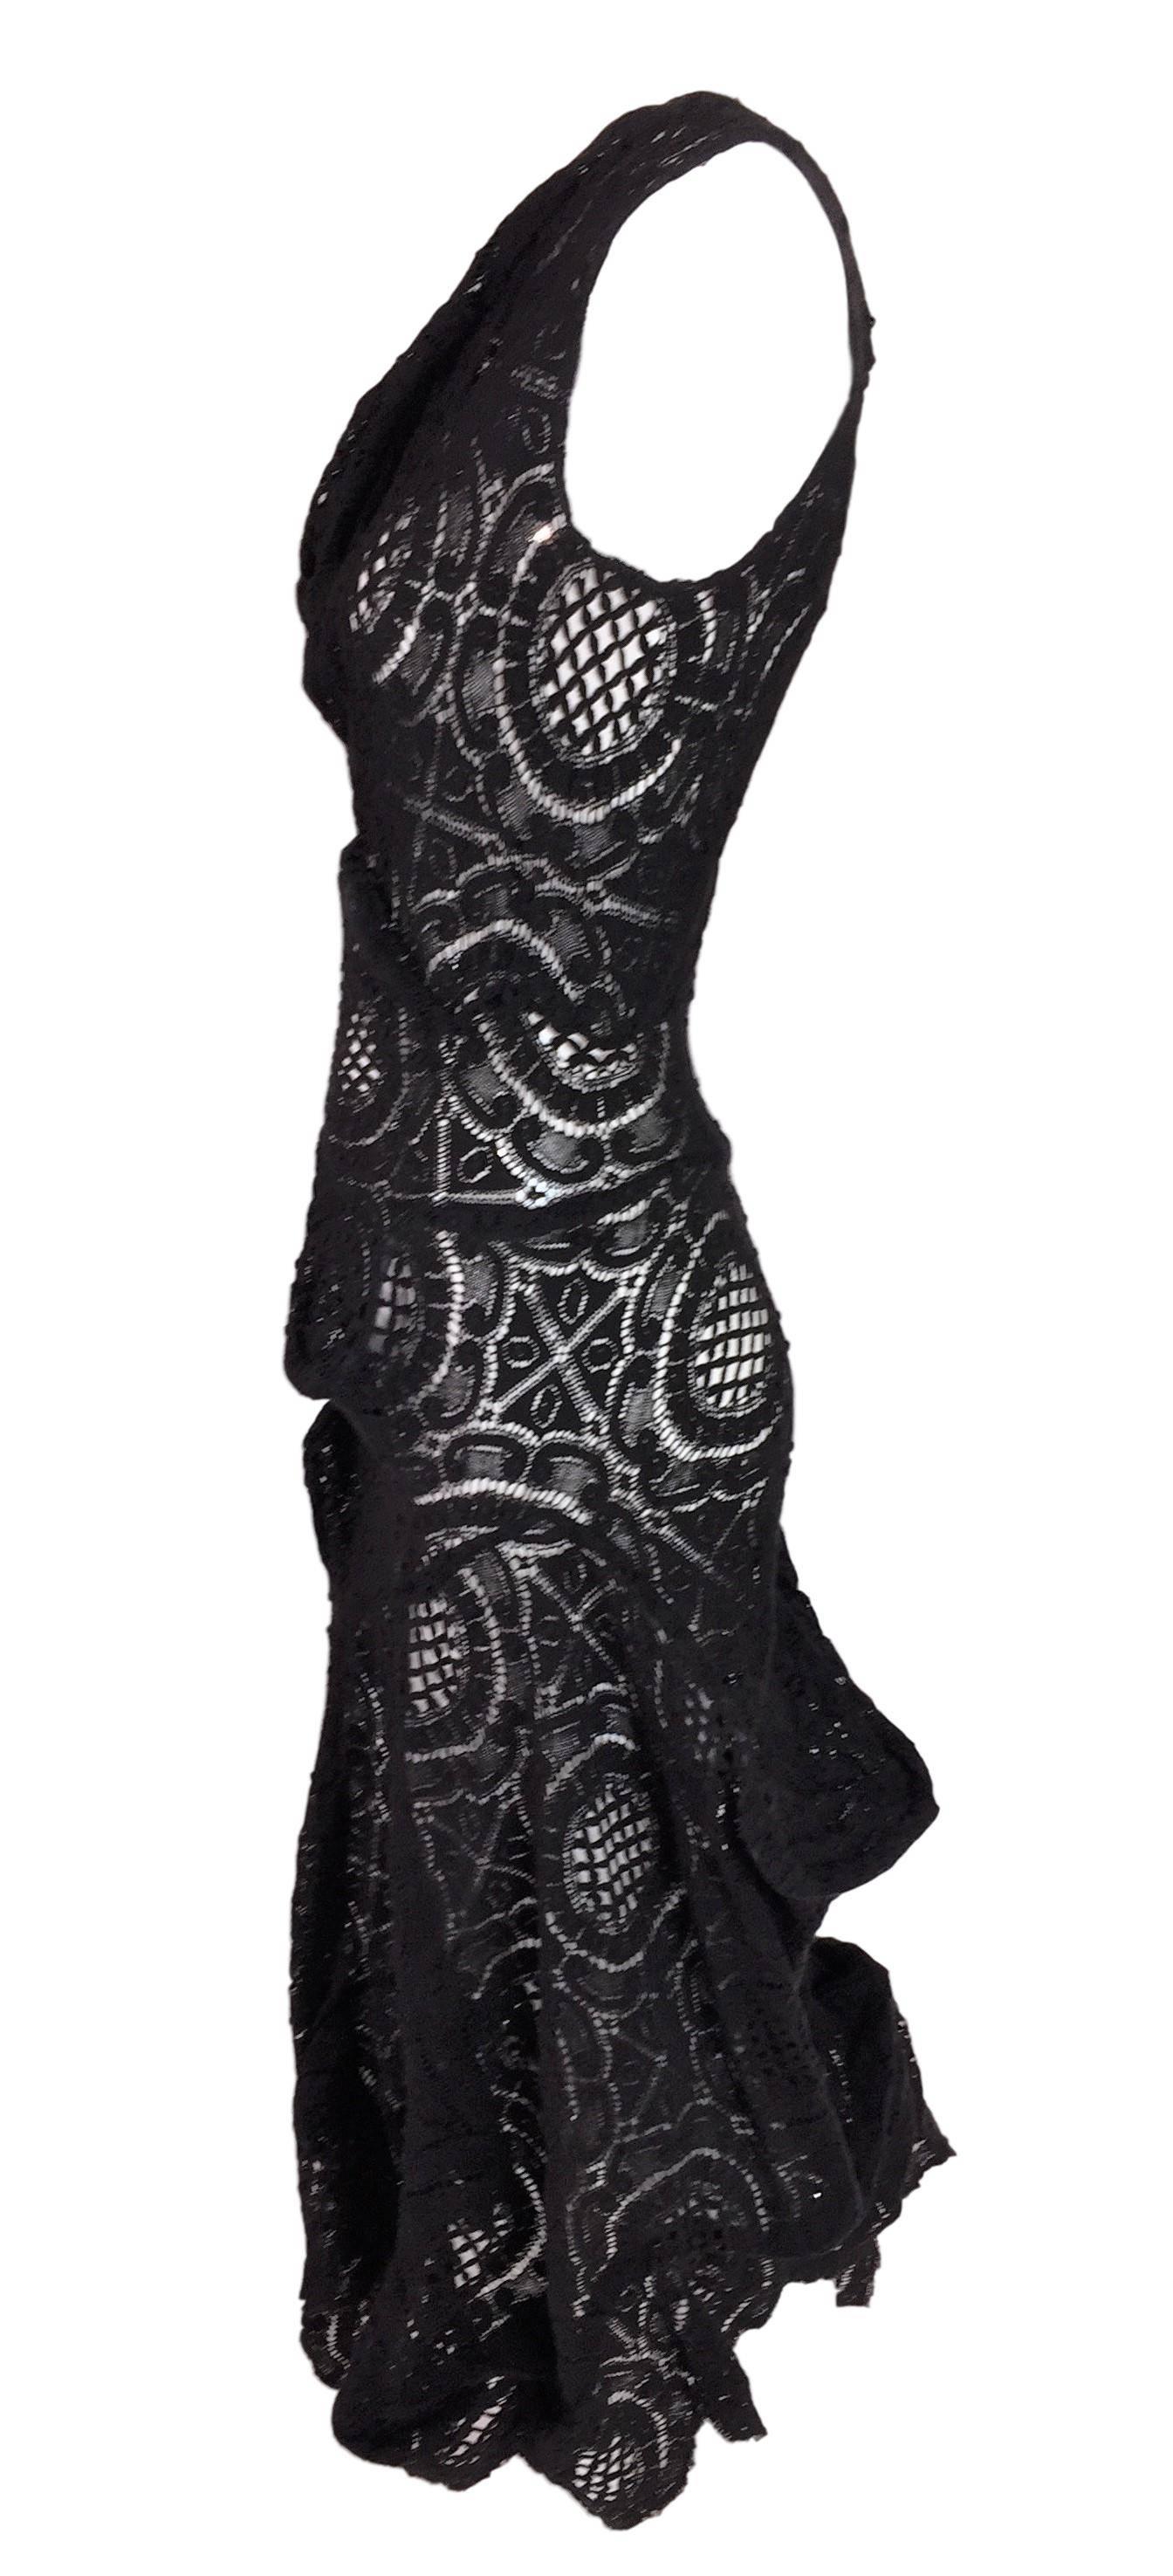 Women's S/S 2002 Vivienne Westwood Couture OOAK Sheer Black Avant Garde Dress